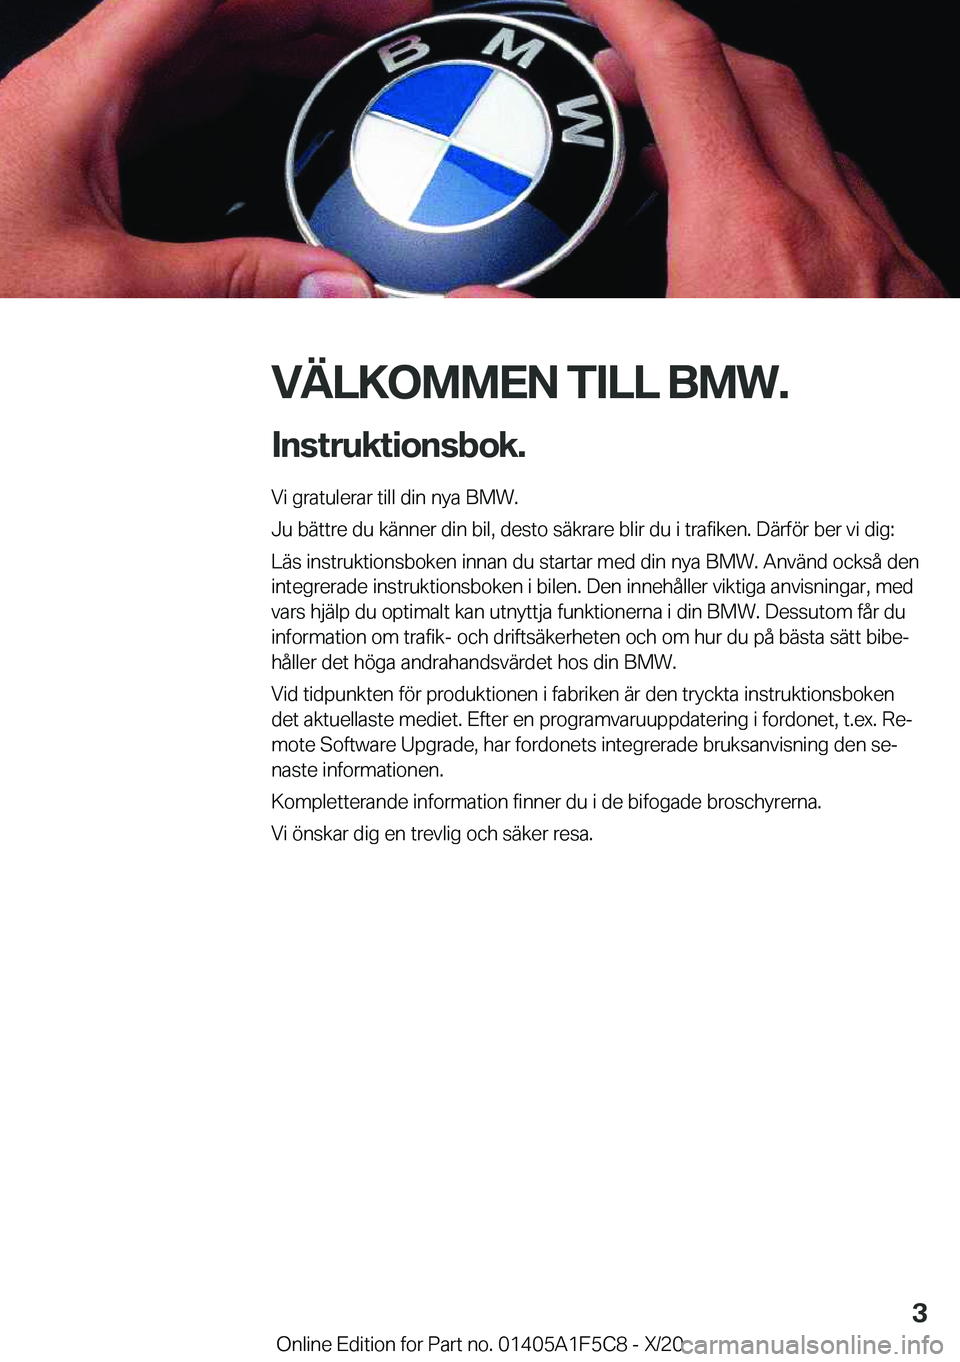 BMW X4 M 2021  InstruktionsbÖcker (in Swedish) �V�Ä�L�K�O�M�M�E�N��T�I�L�L��B�M�W�.�I�n�s�t�r�u�k�t�i�o�n�s�b�o�k�.
�V�i��g�r�a�t�u�l�e�r�a�r��t�i�l�l��d�i�n��n�y�a��B�M�W�.
�J�u��b�ä�t�t�r�e��d�u��k�ä�n�n�e�r��d�i�n��b�i�l�,��d�e�